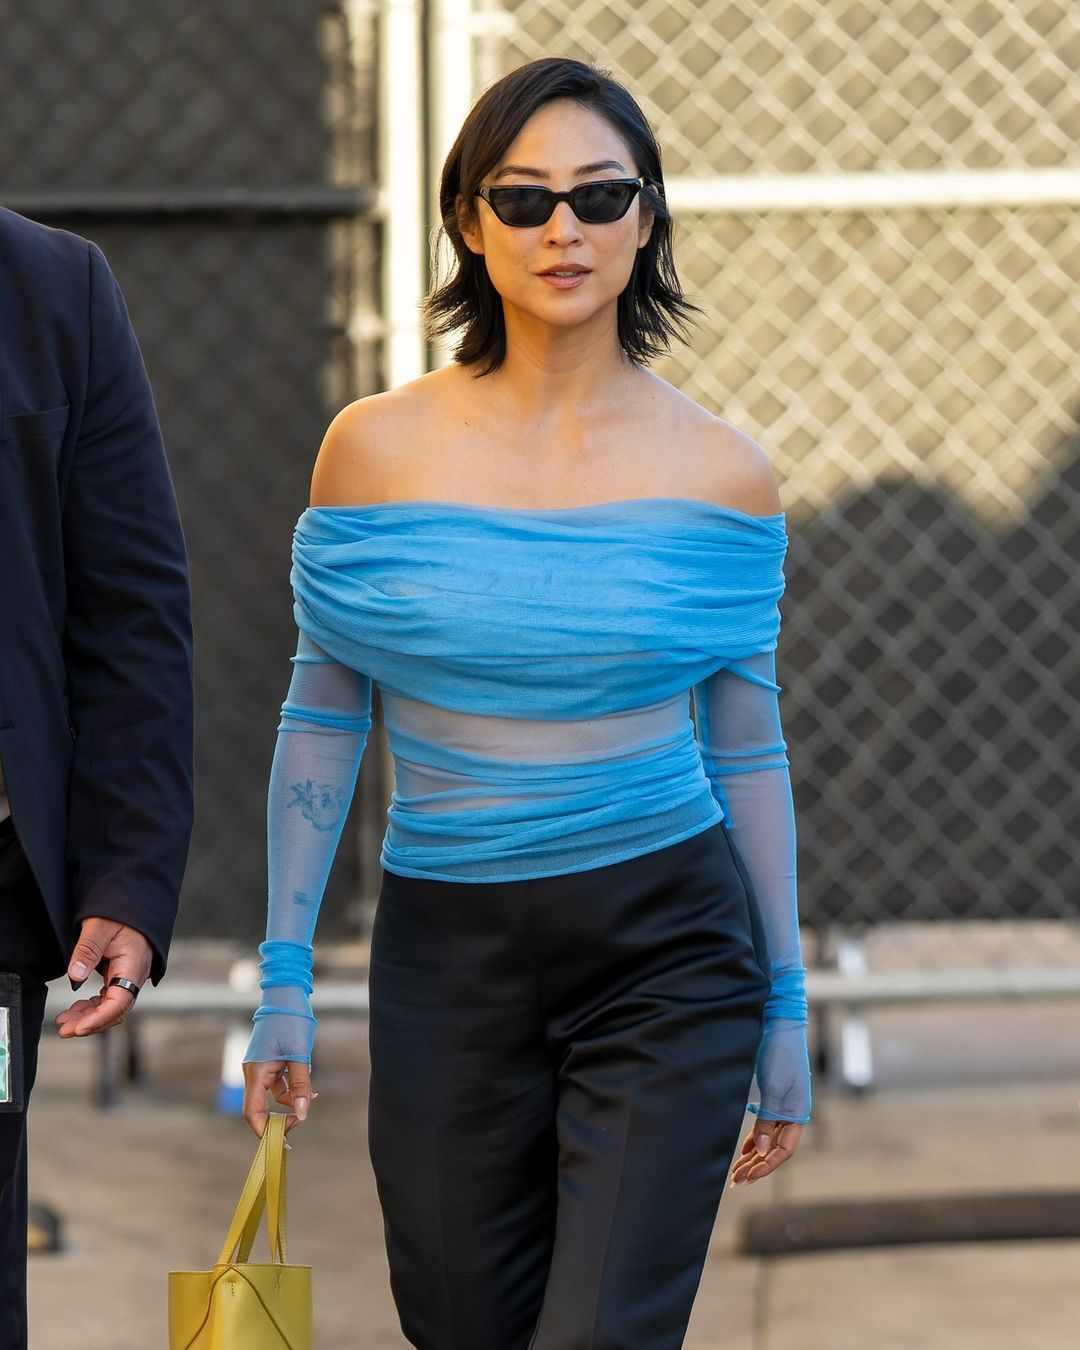 greta lee wearing blue top and black sunglasses outside